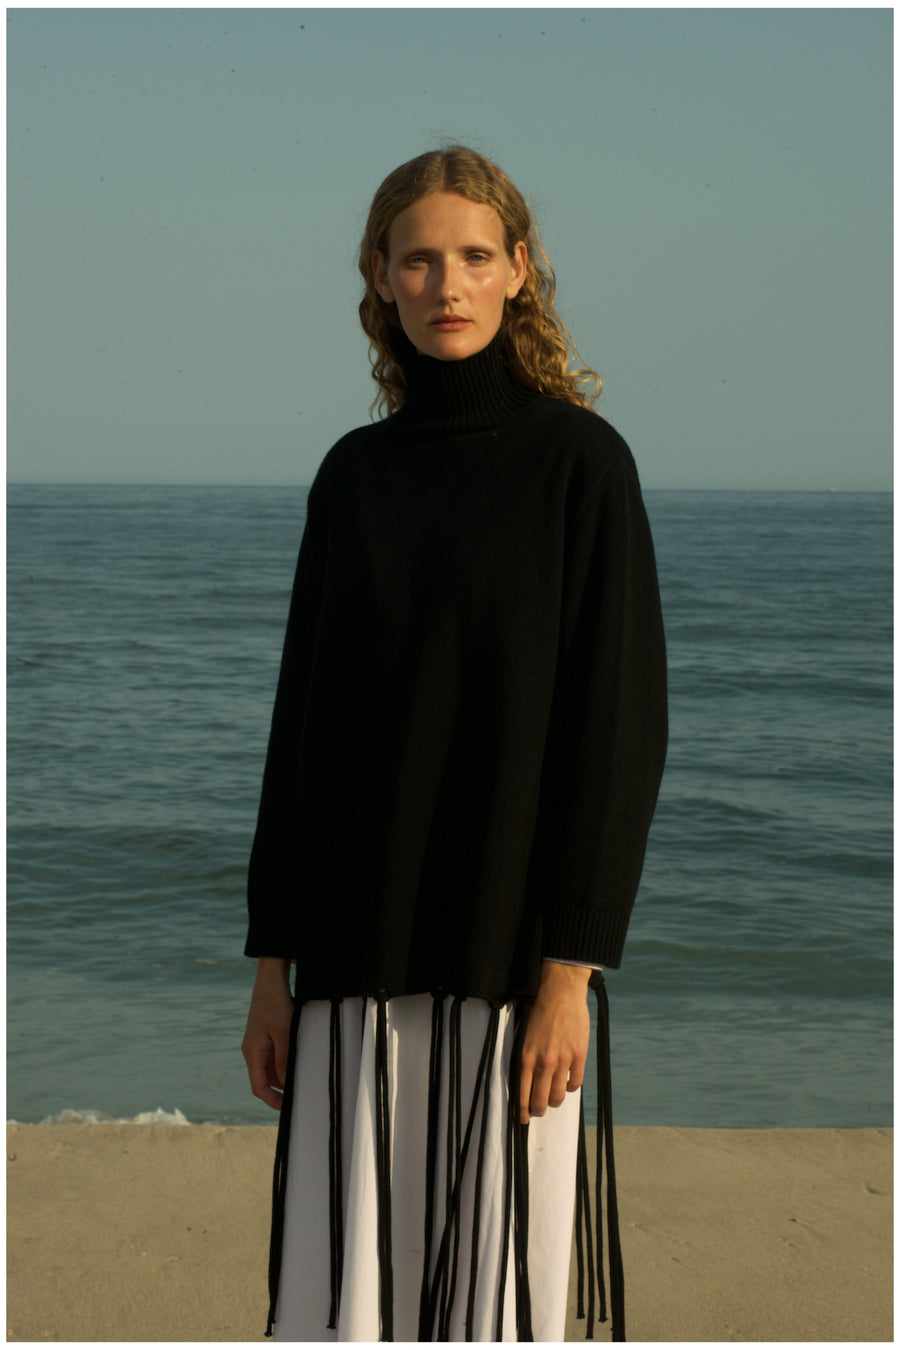 Ingrid Fringe Sweater in Black